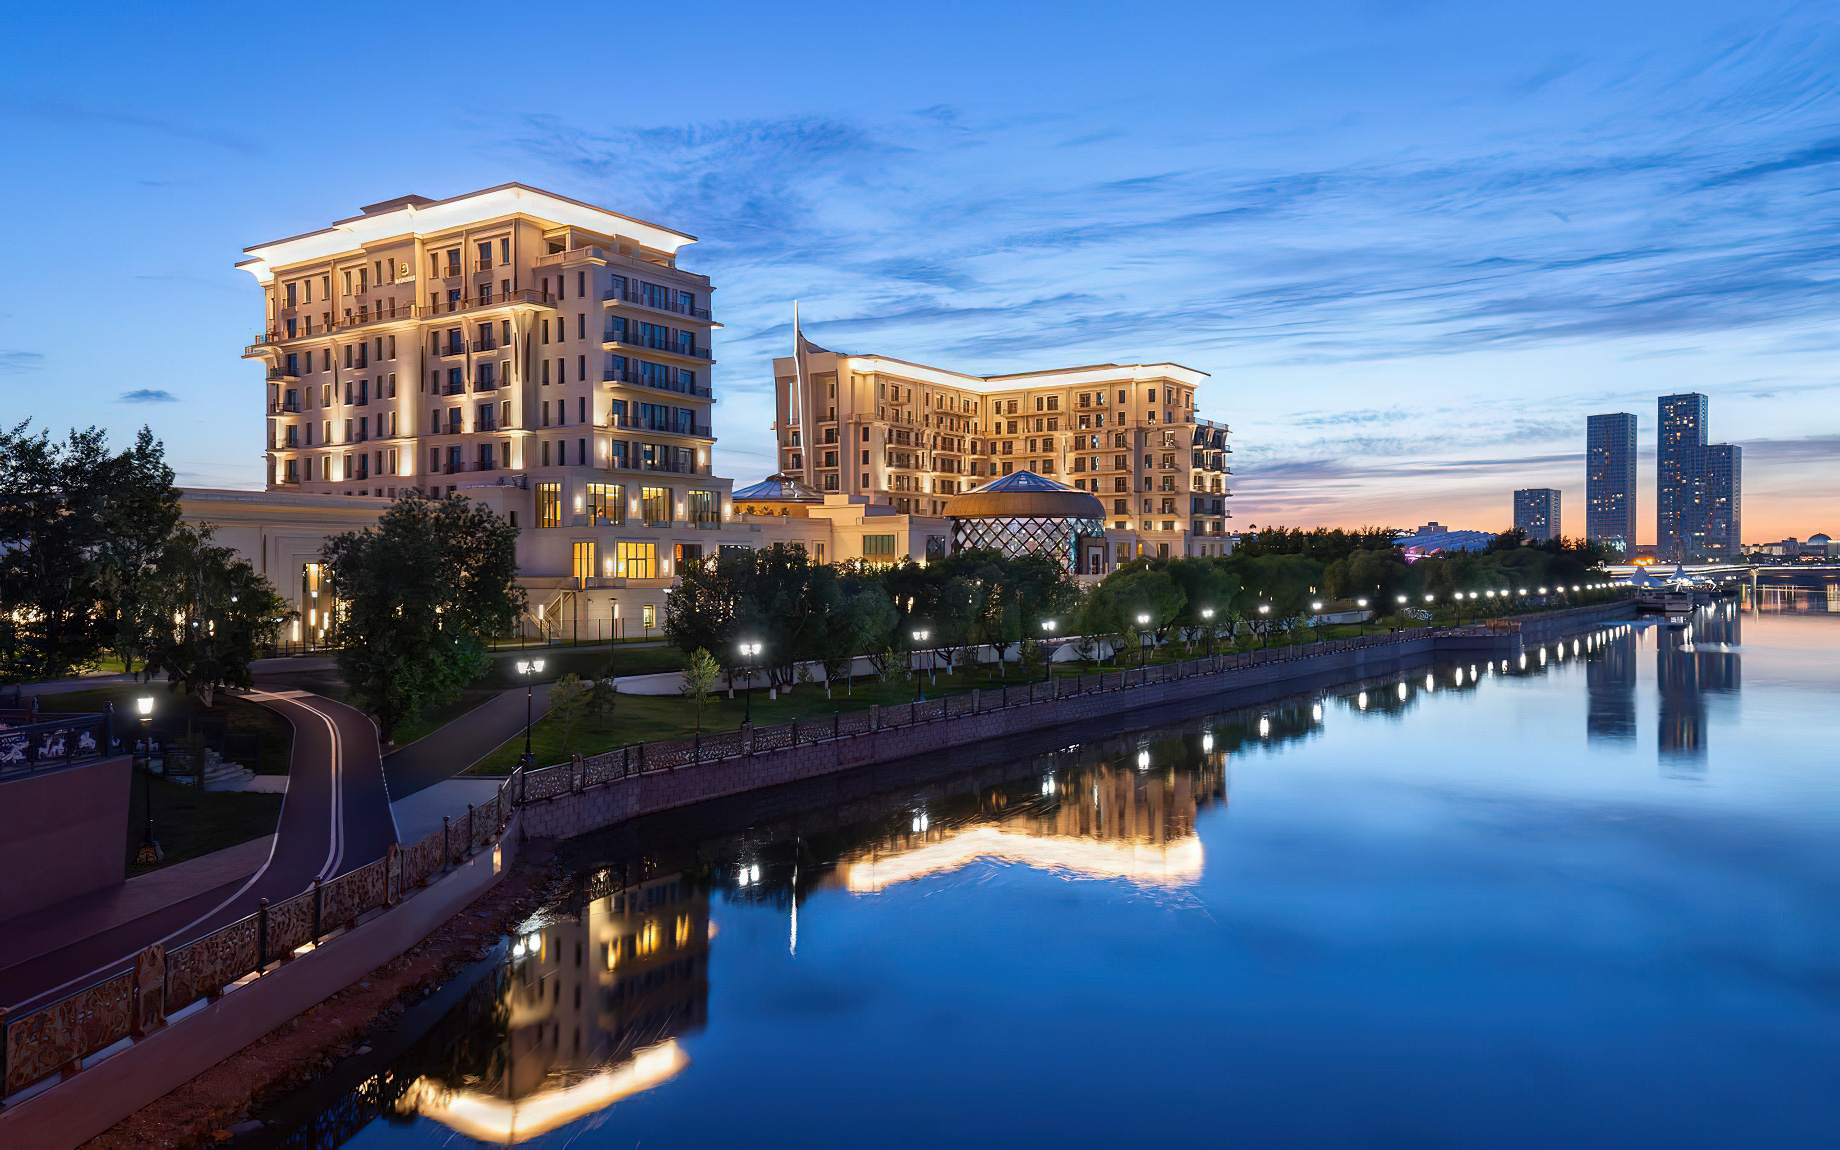 The St. Regis Astana Hotel - Astana, Kazakhstan - Hotel River View Night